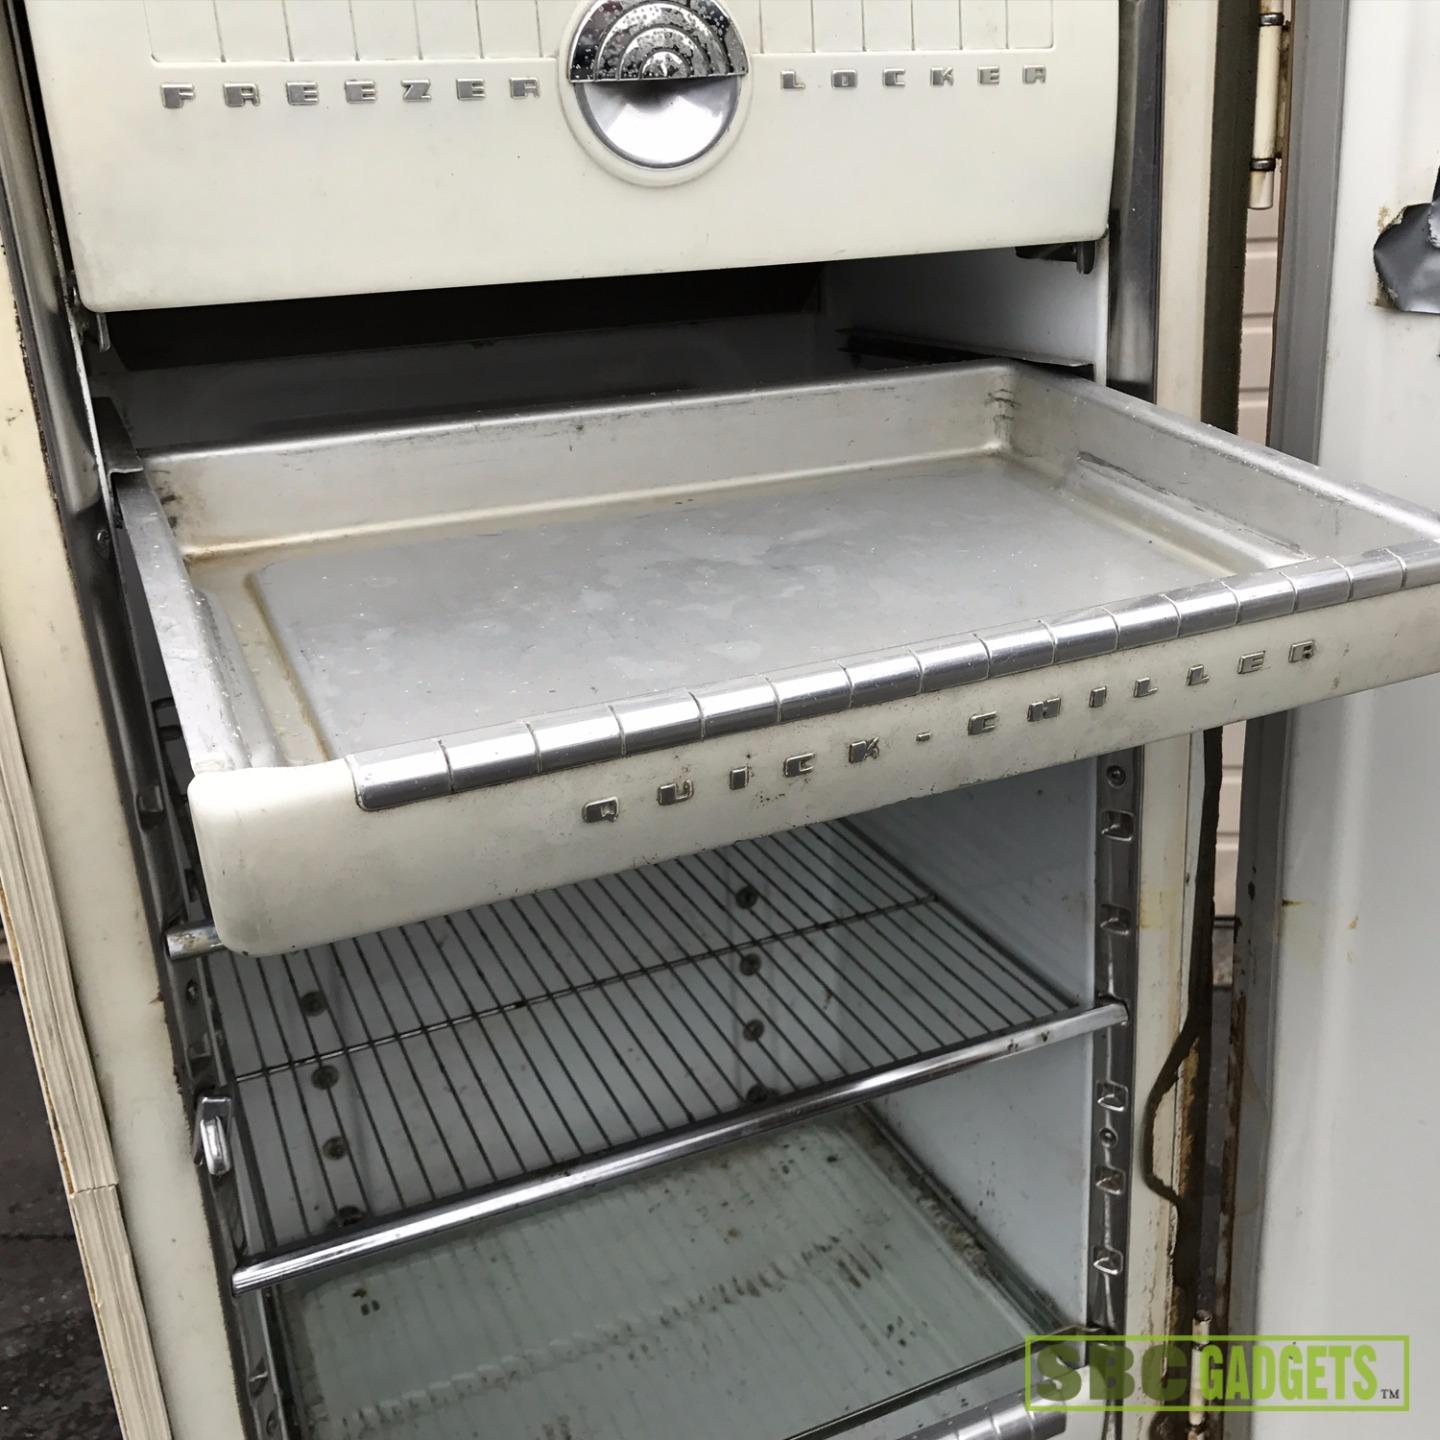 Vintage philco refrigerator serial numbers